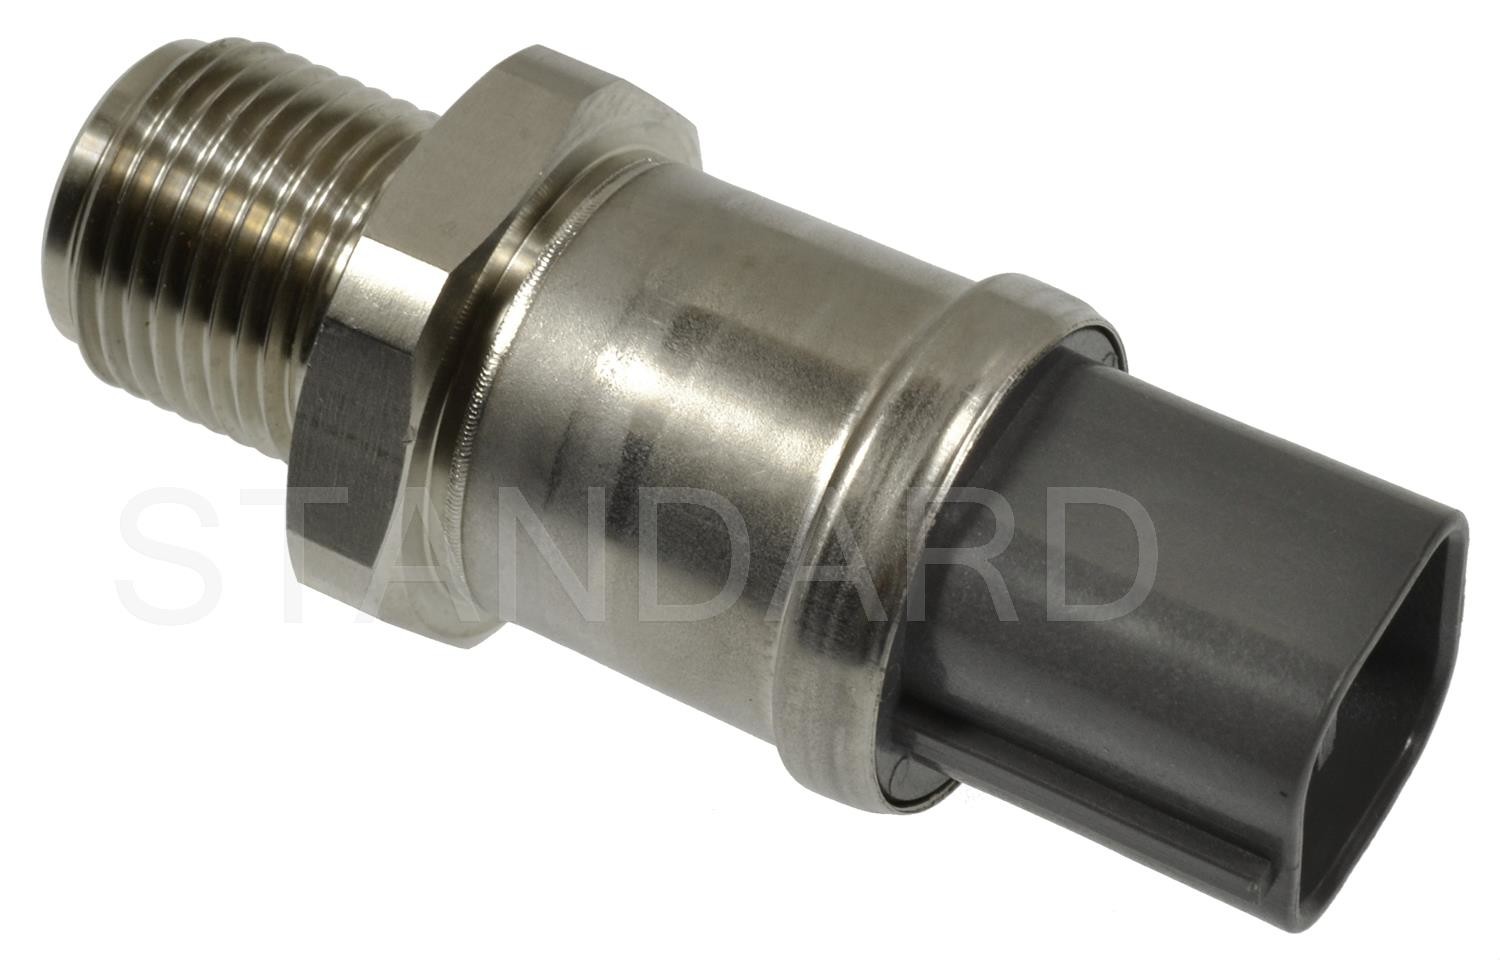 Foto de Sensor de Presin de Combustible para Honda Civic Marca STANDARD MOTOR PRODUCTS Nmero de Parte #AS485